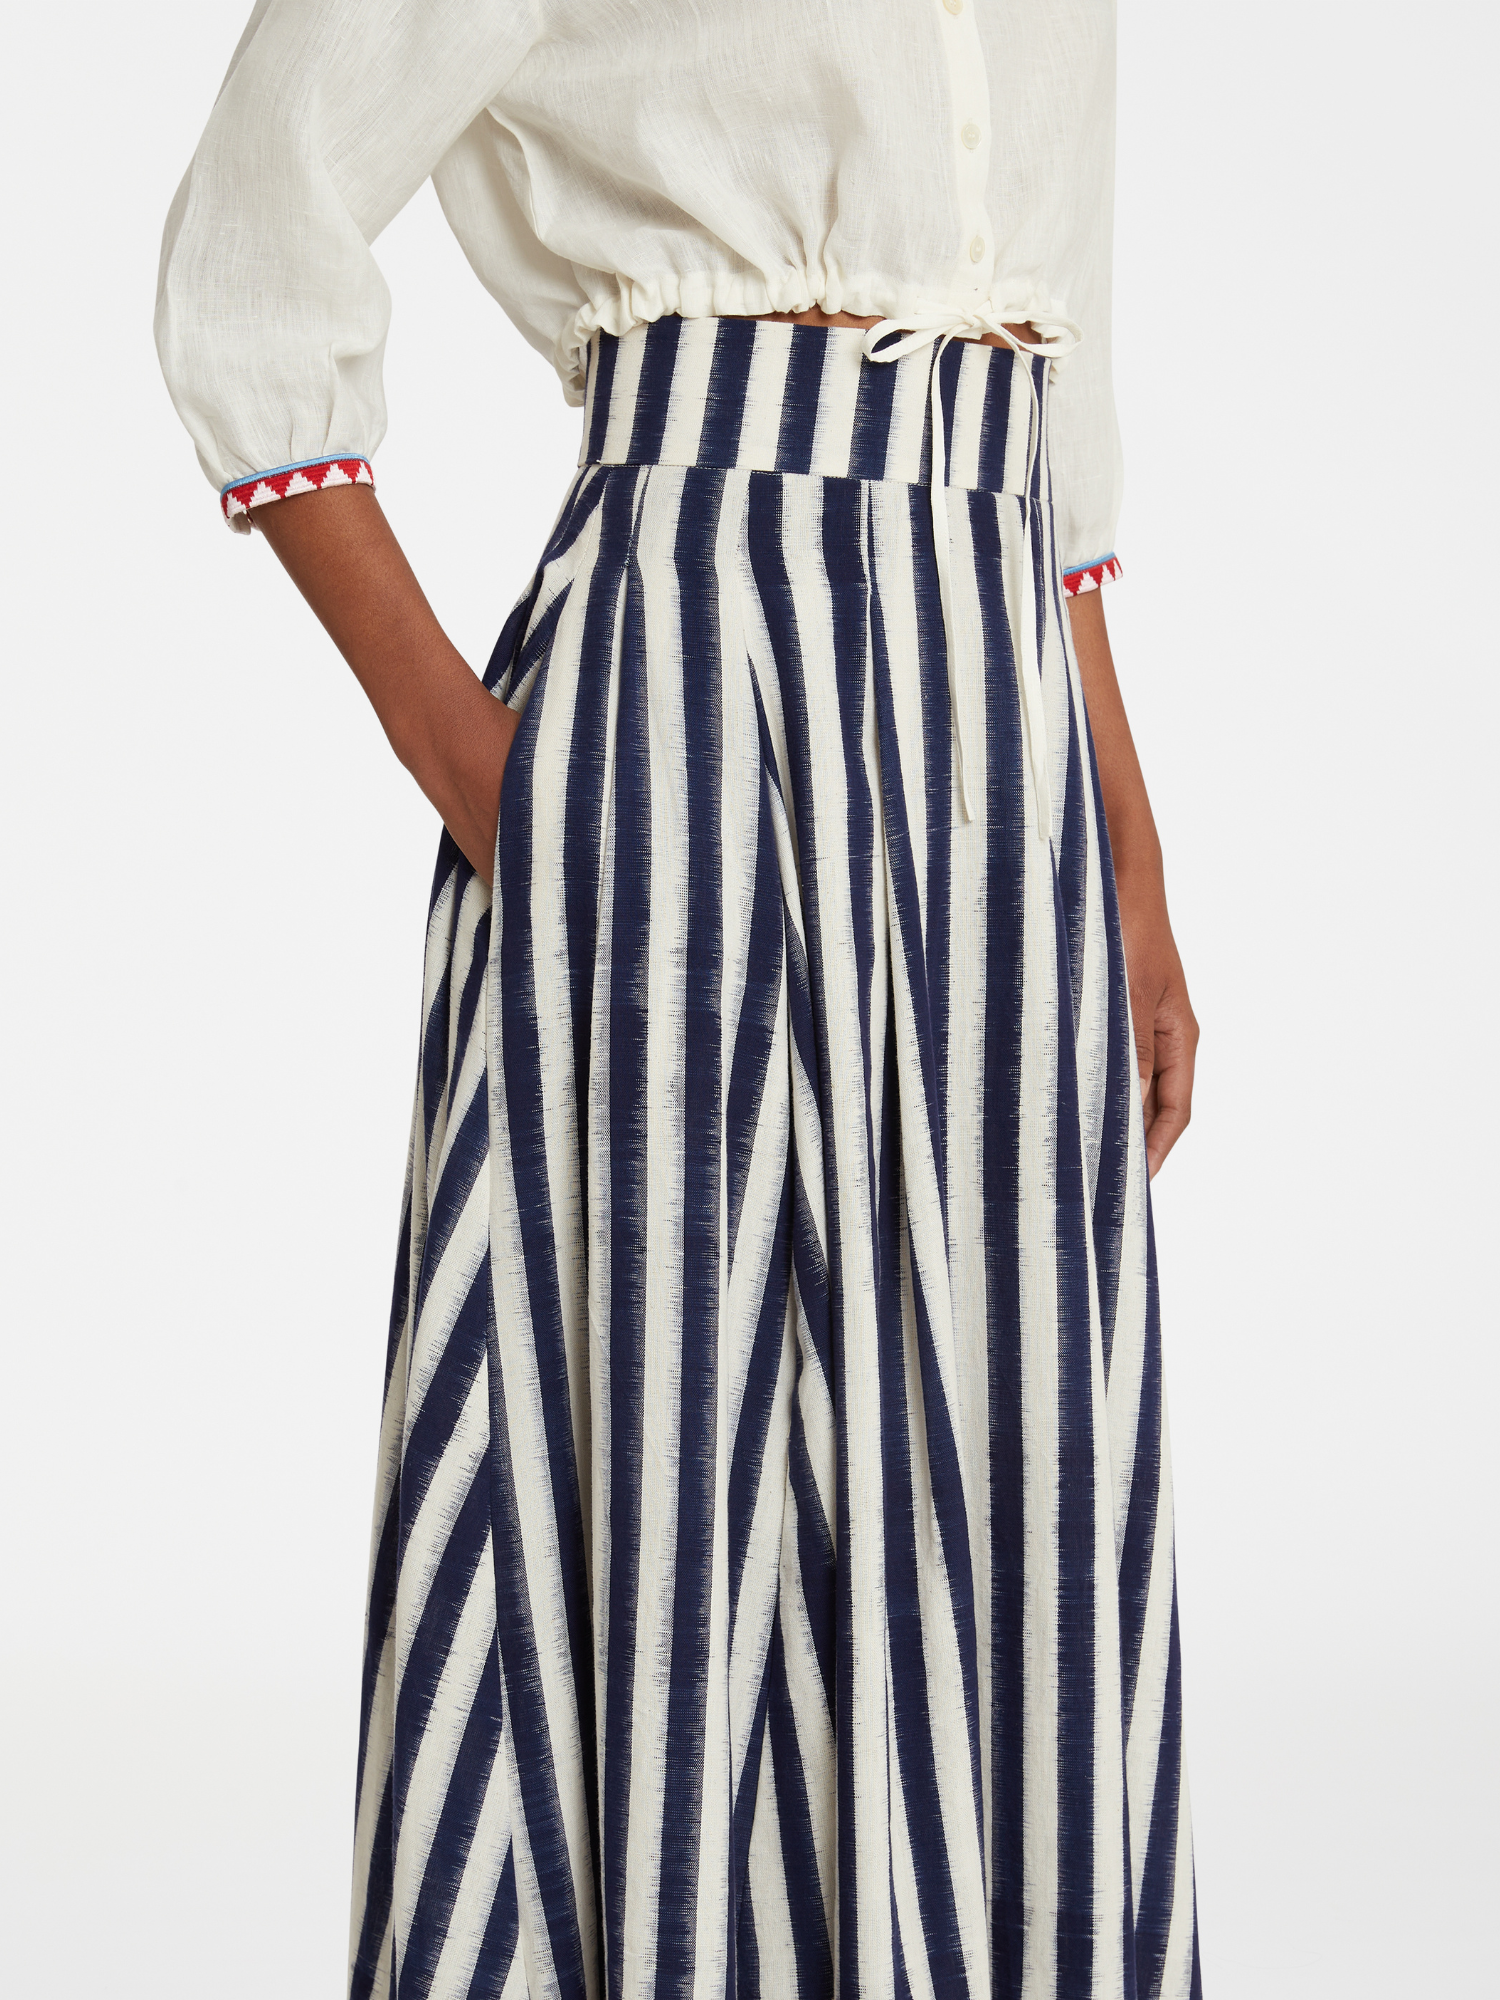 Emporio Sirenuse Flaminia Ikat Stripe Maxi Skirt